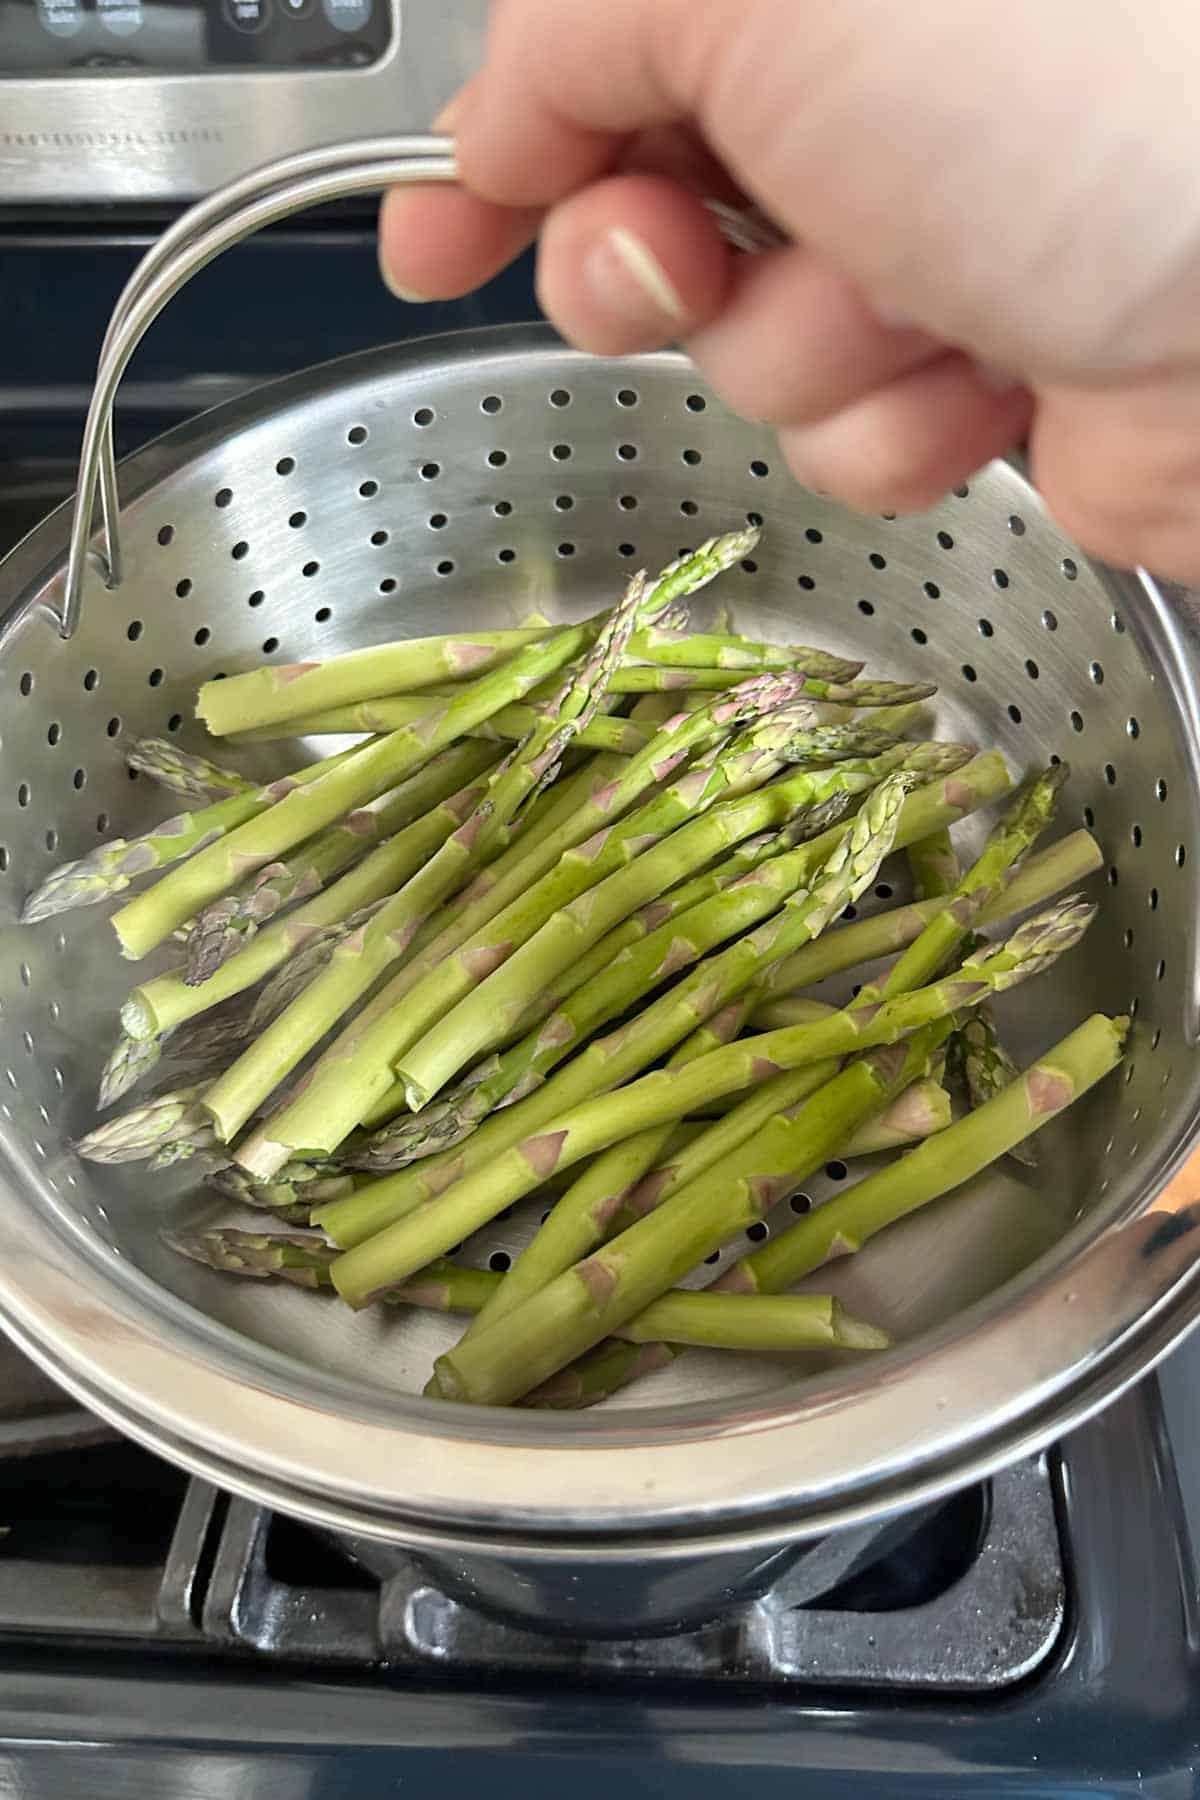 Placing a steamer basket full of asparagus on a steamer pot.